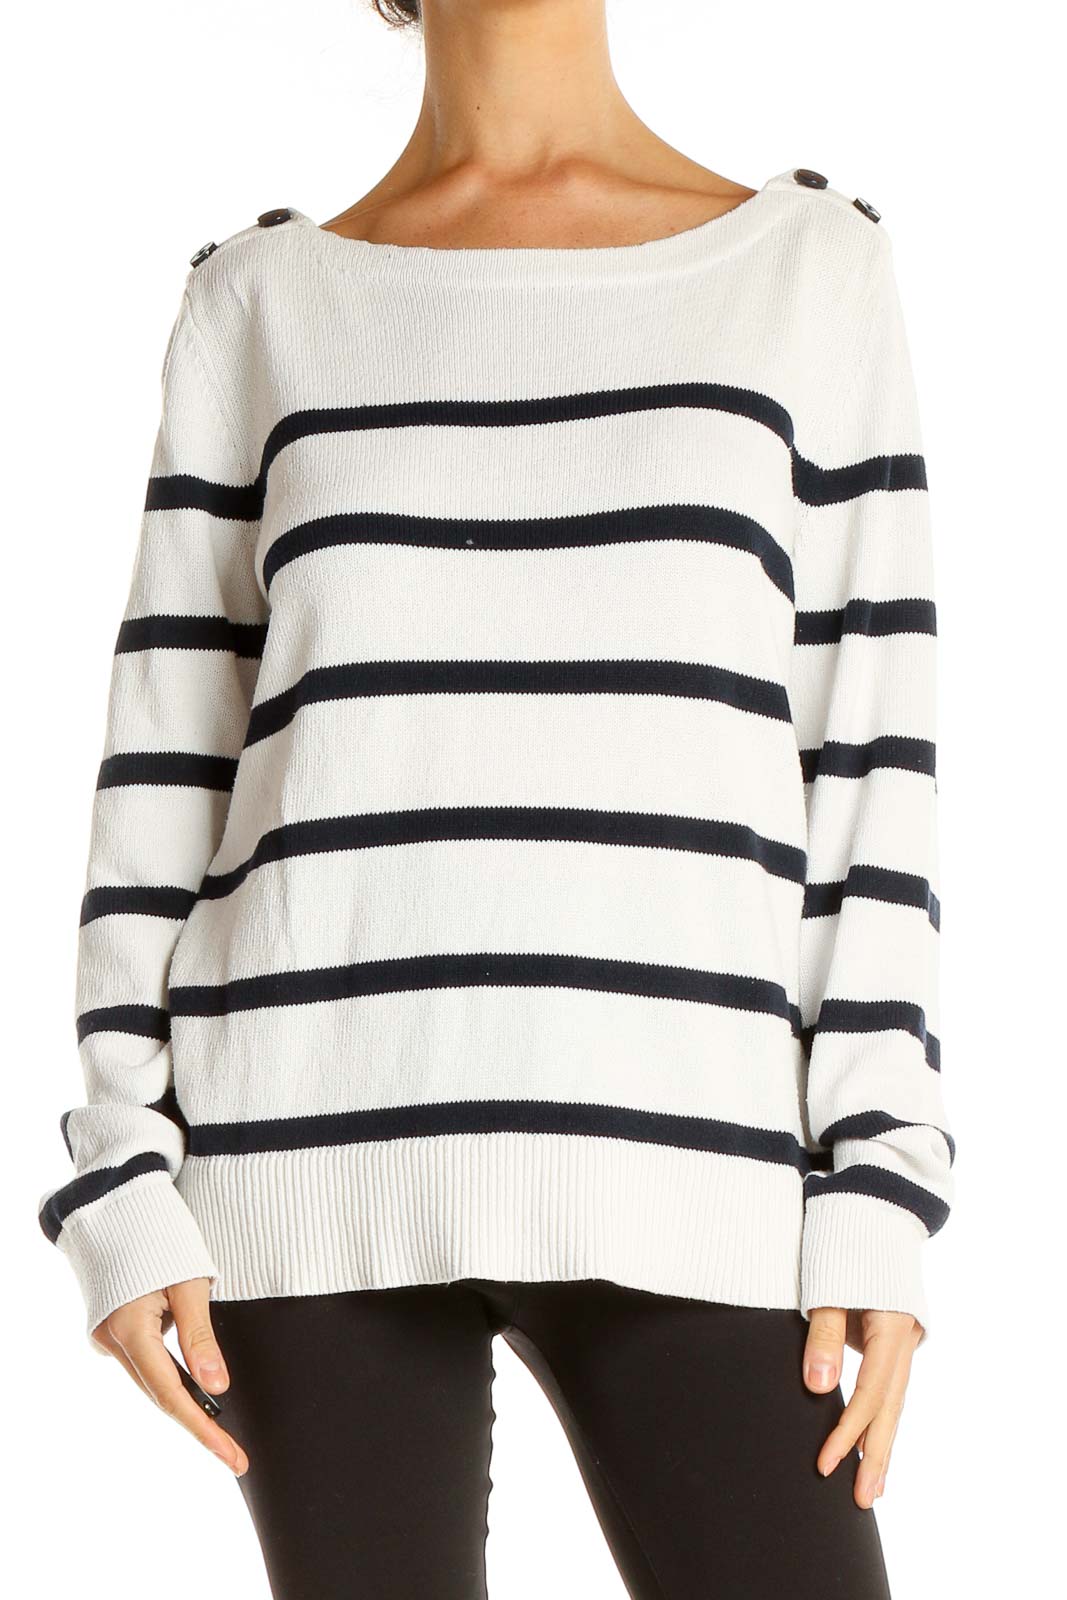 White Black Striped Classic Sweater Front